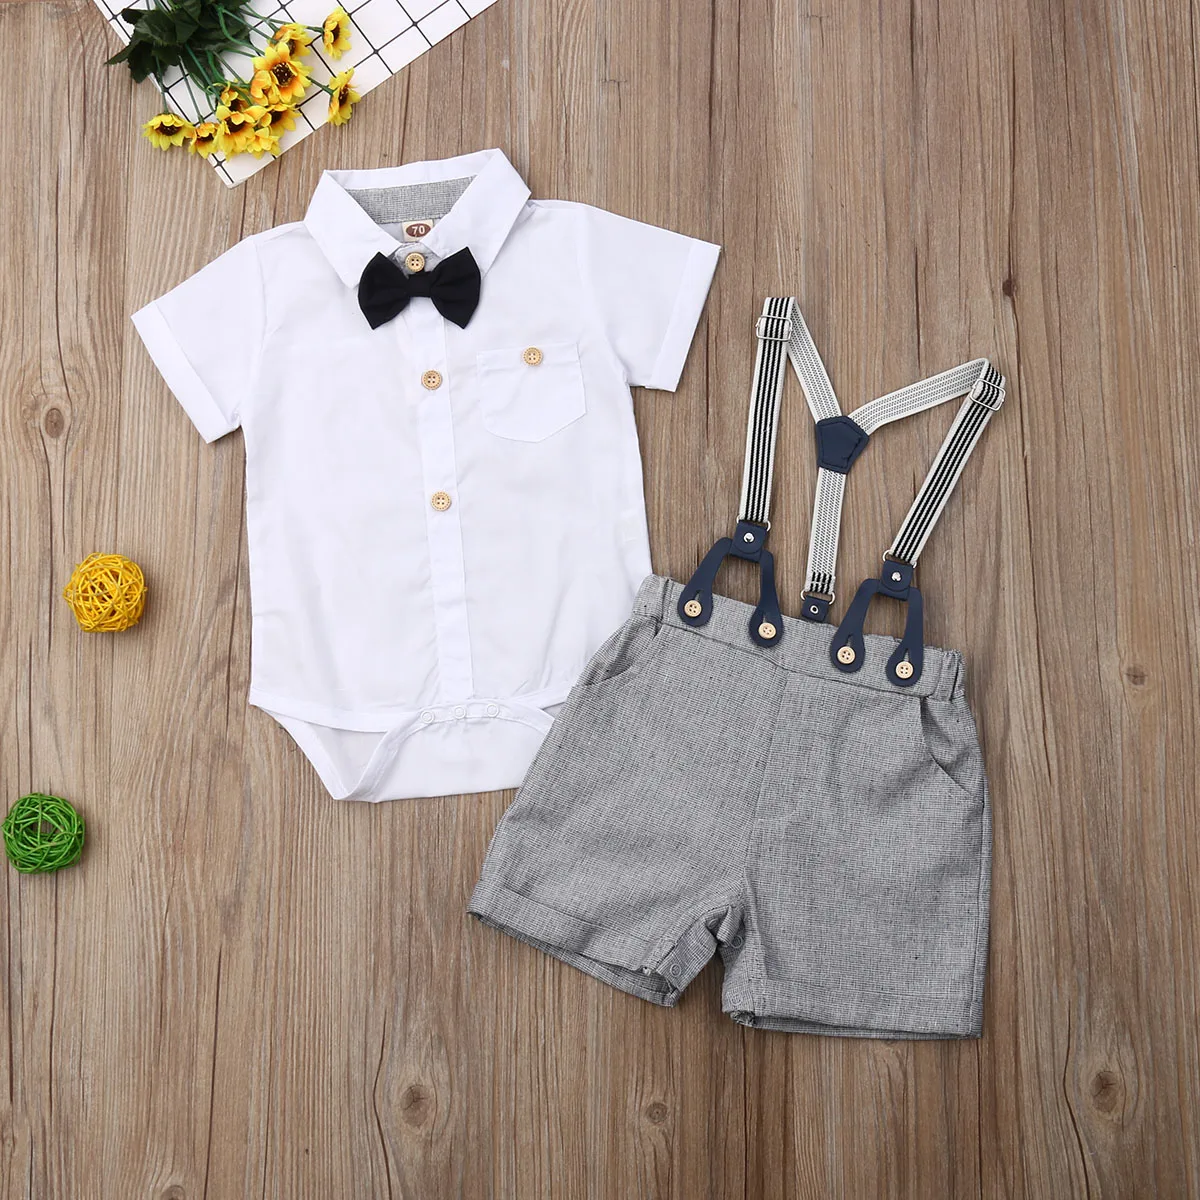 

Baby Boys Gentleman Clothes Set White Shirt Bodysuit Romper Shorts Overalls Bib Pants 0-24M Newborn Infant Toddler Summer Outfit